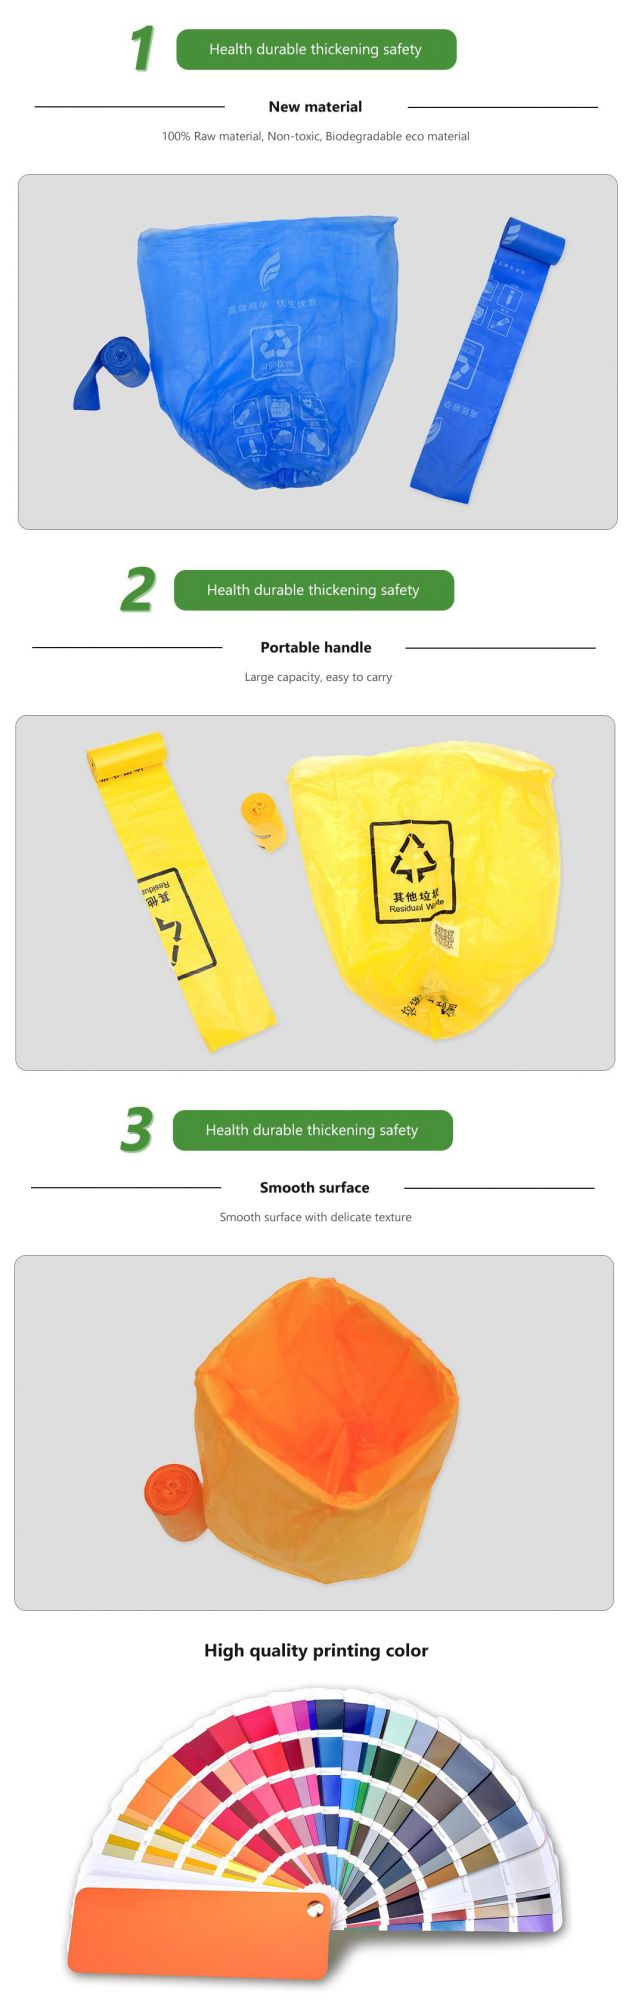 PLA+Pbat/Pbat+Corn Starch Biodegradable Bags, Compostable Bags, Garbage Bags for Indoor